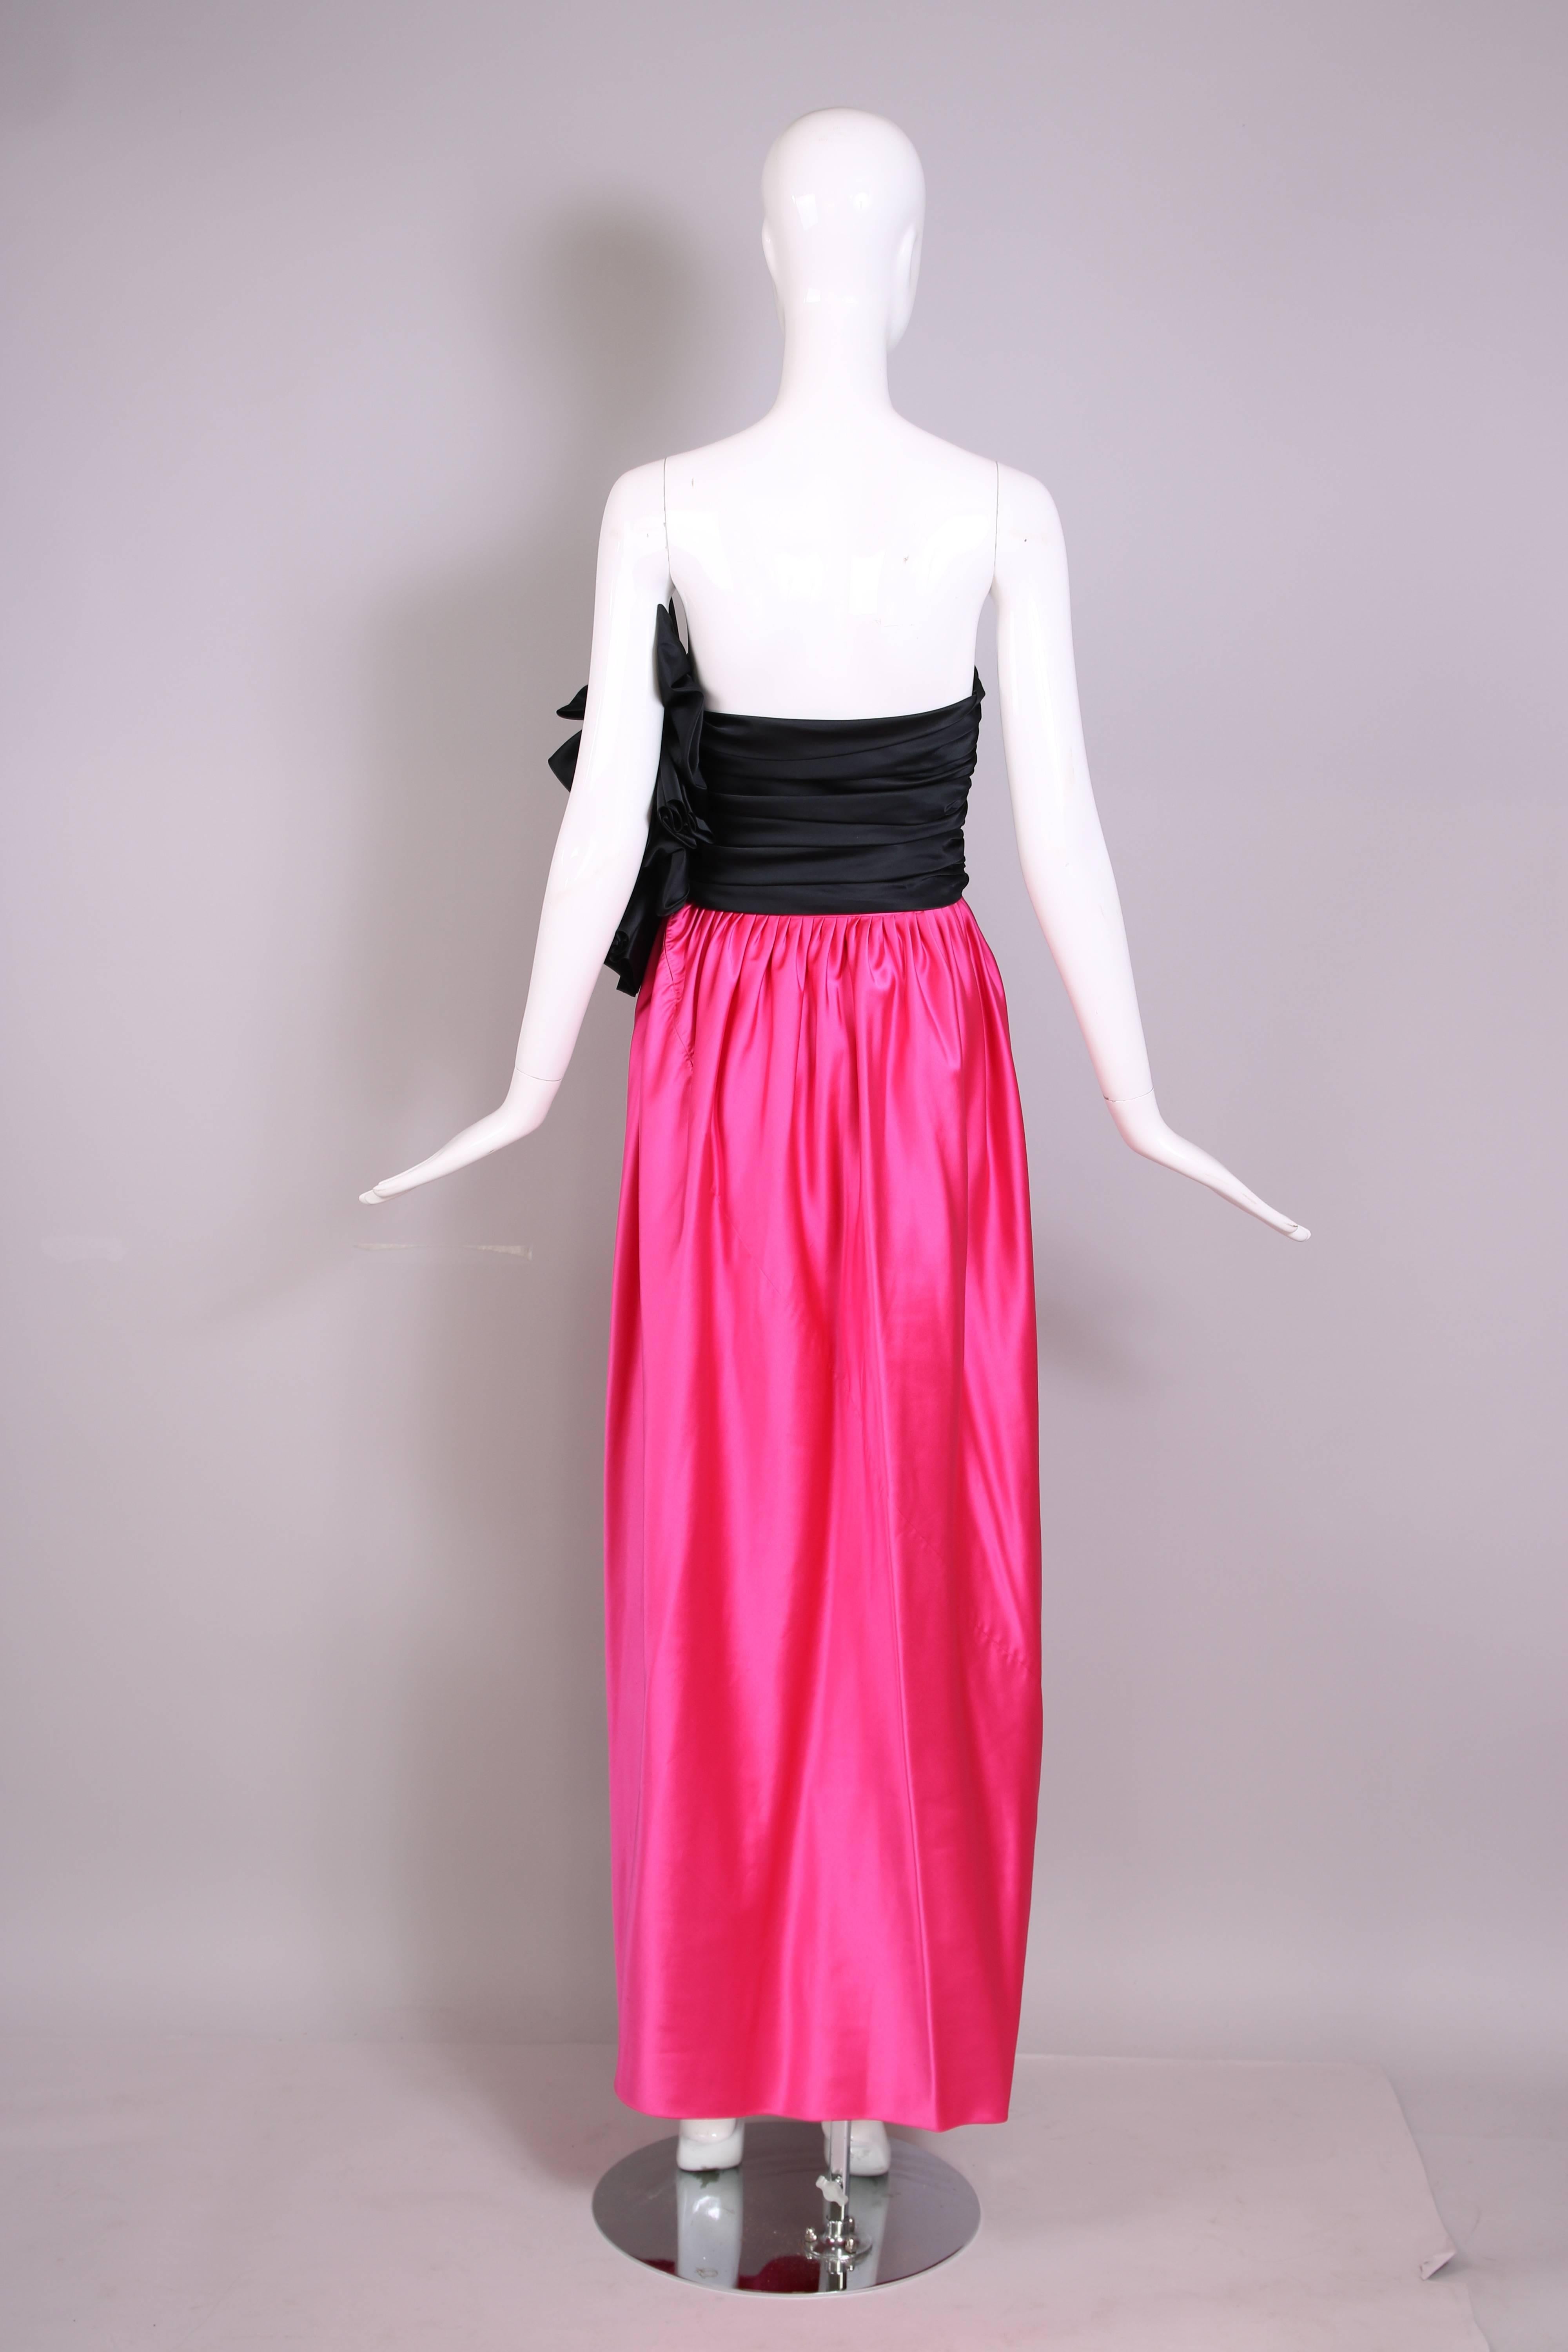 1979 Lanvin Haute Couture Pink & Black Satin Strapless Evening Gown No. 90724 1